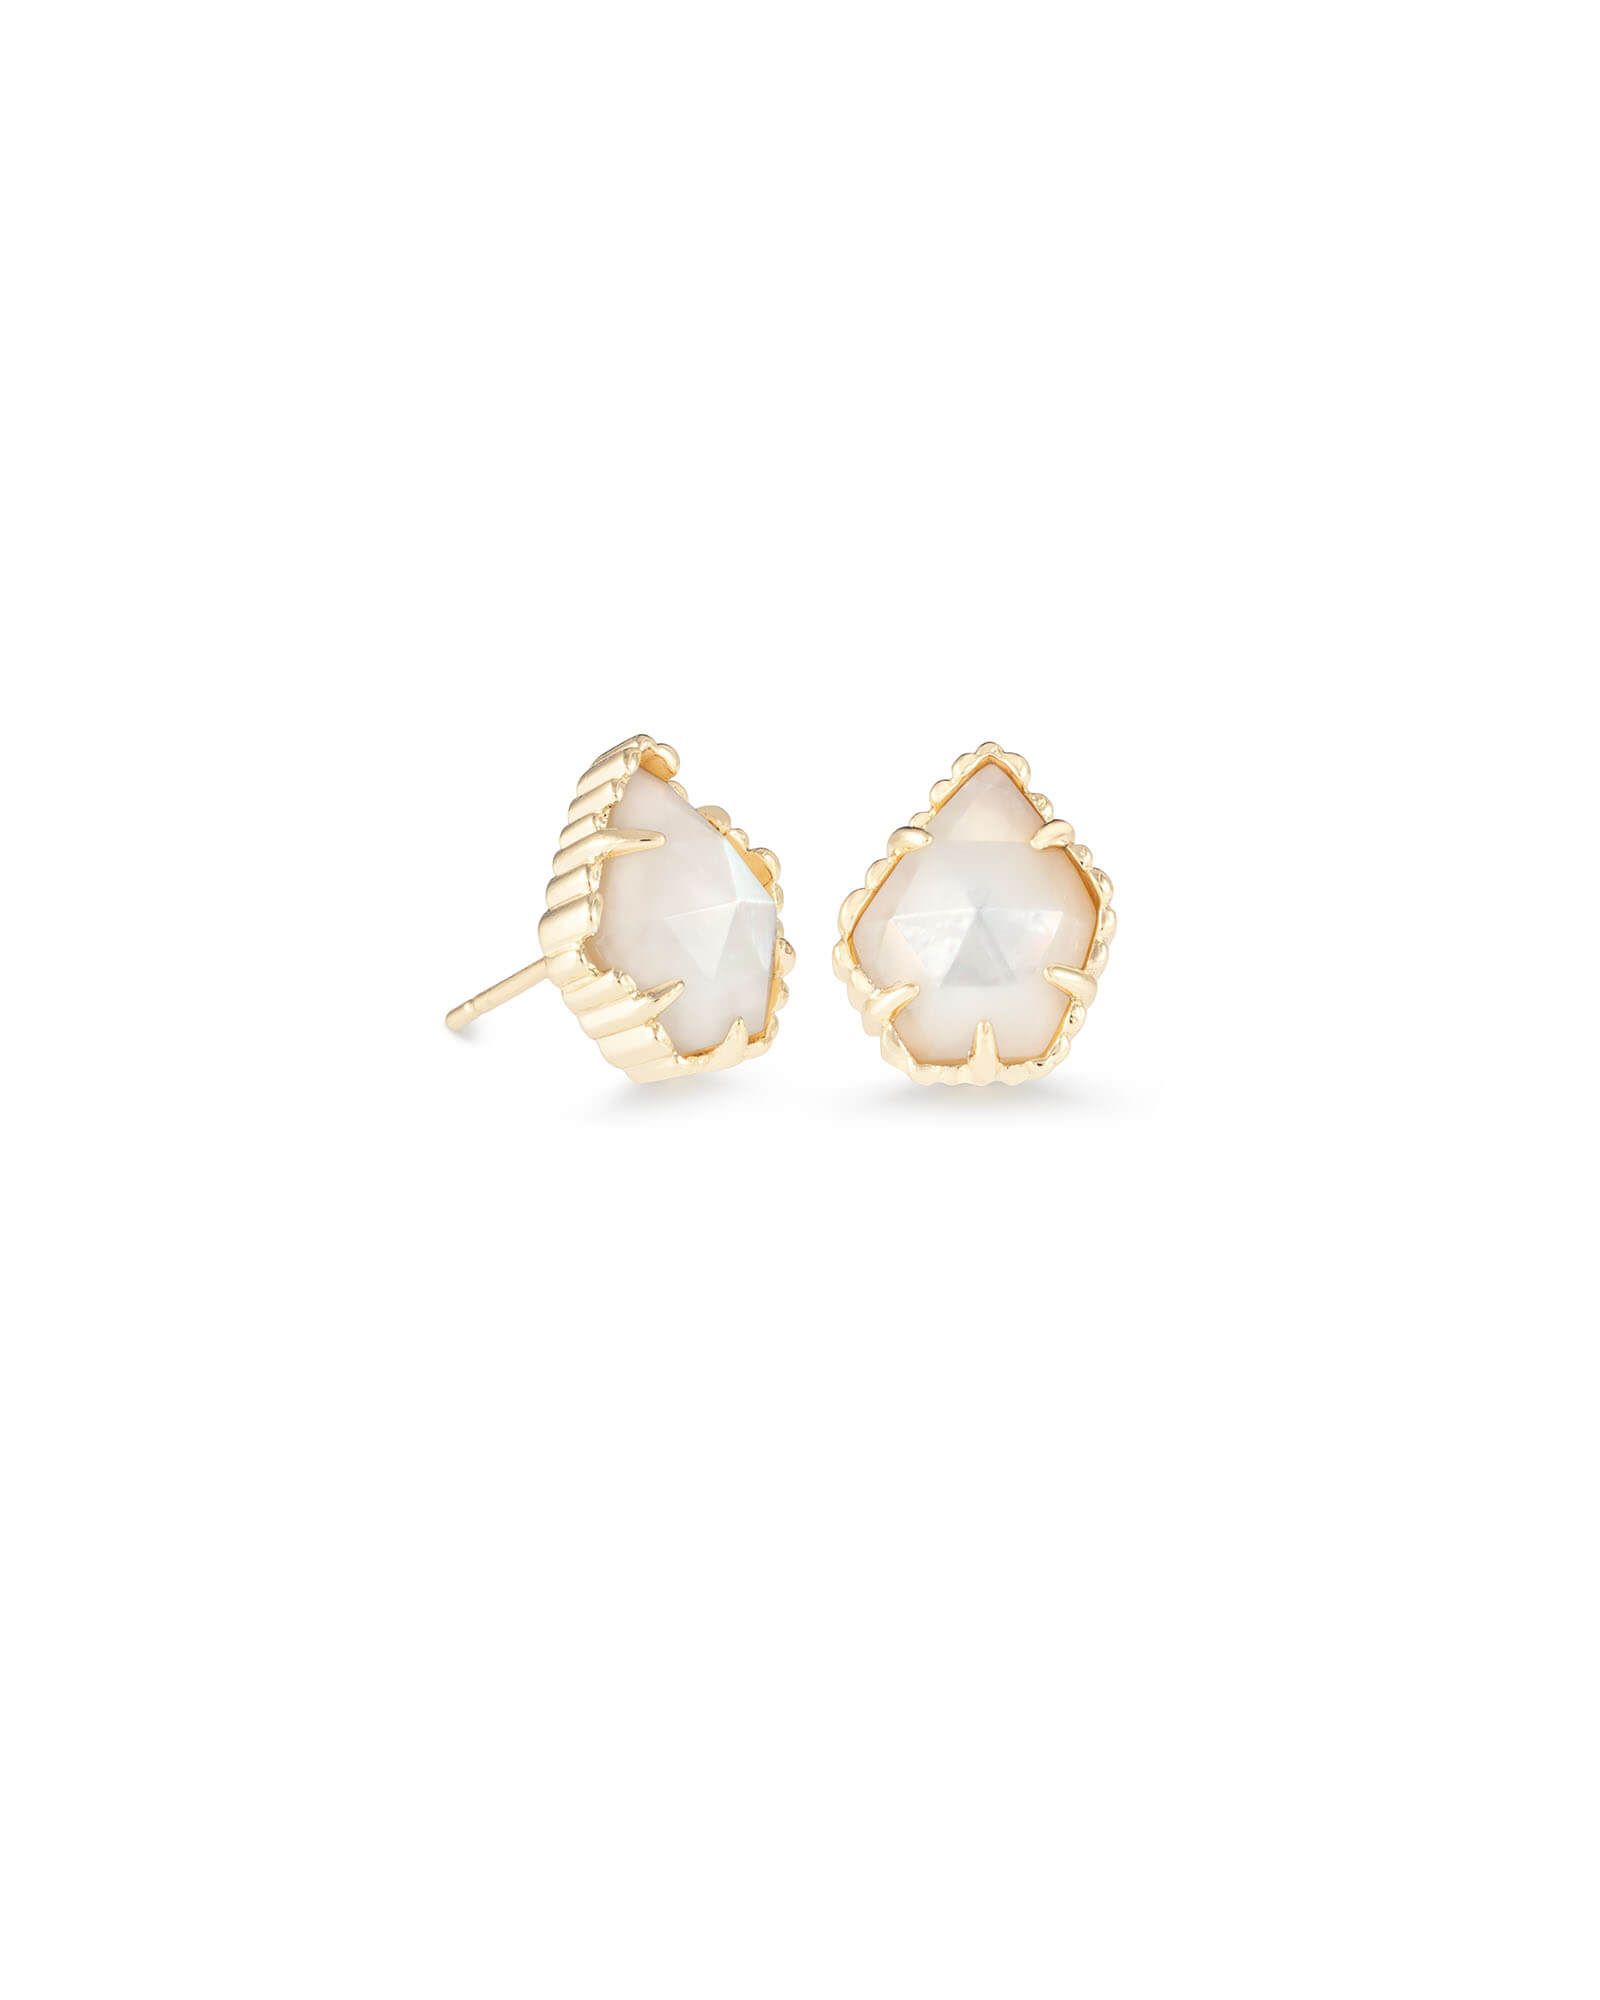 Tessa Gold Stud Earrings in Ivory Pearl | Kendra Scott | Kendra Scott